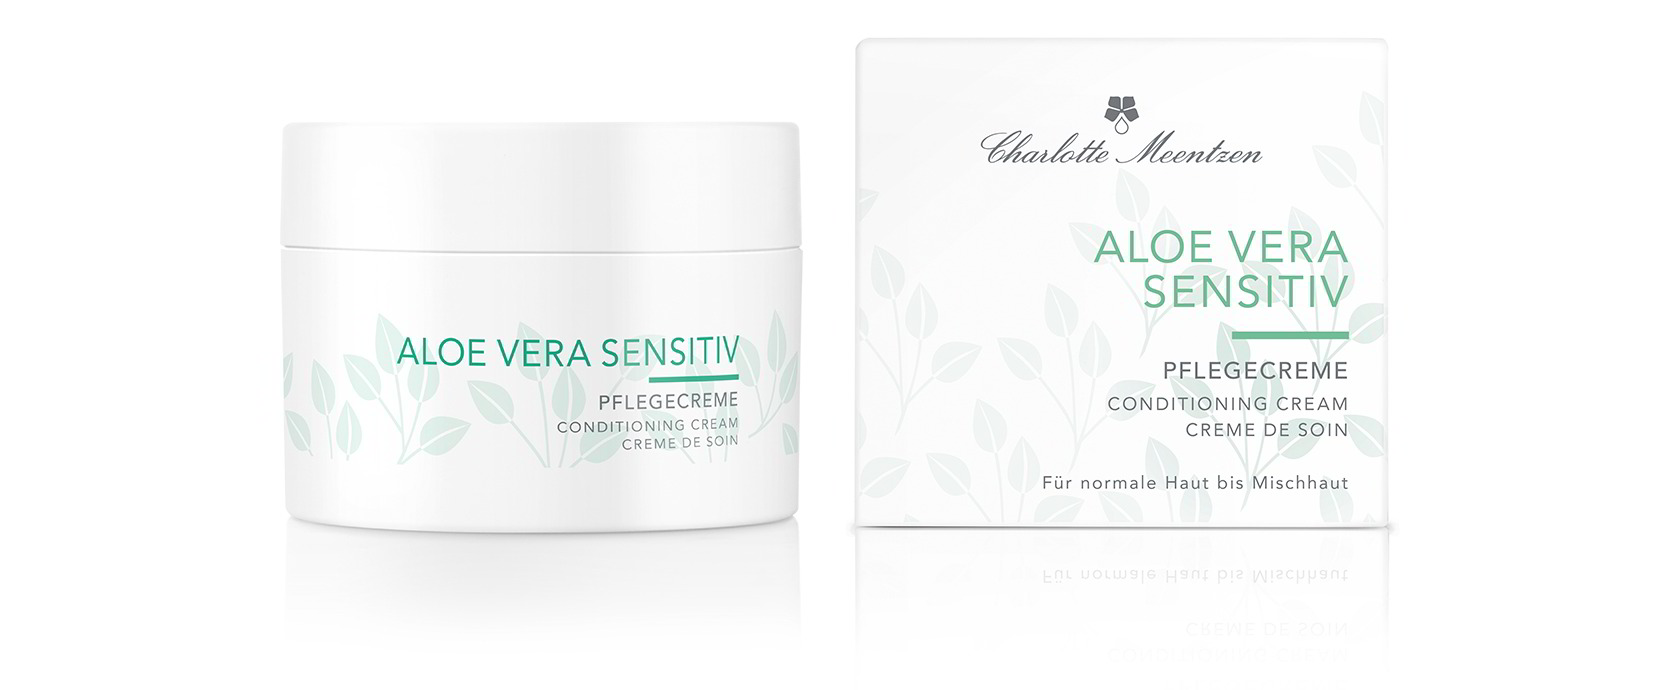 Aloe Vera Sensitiv Conditioning Cream